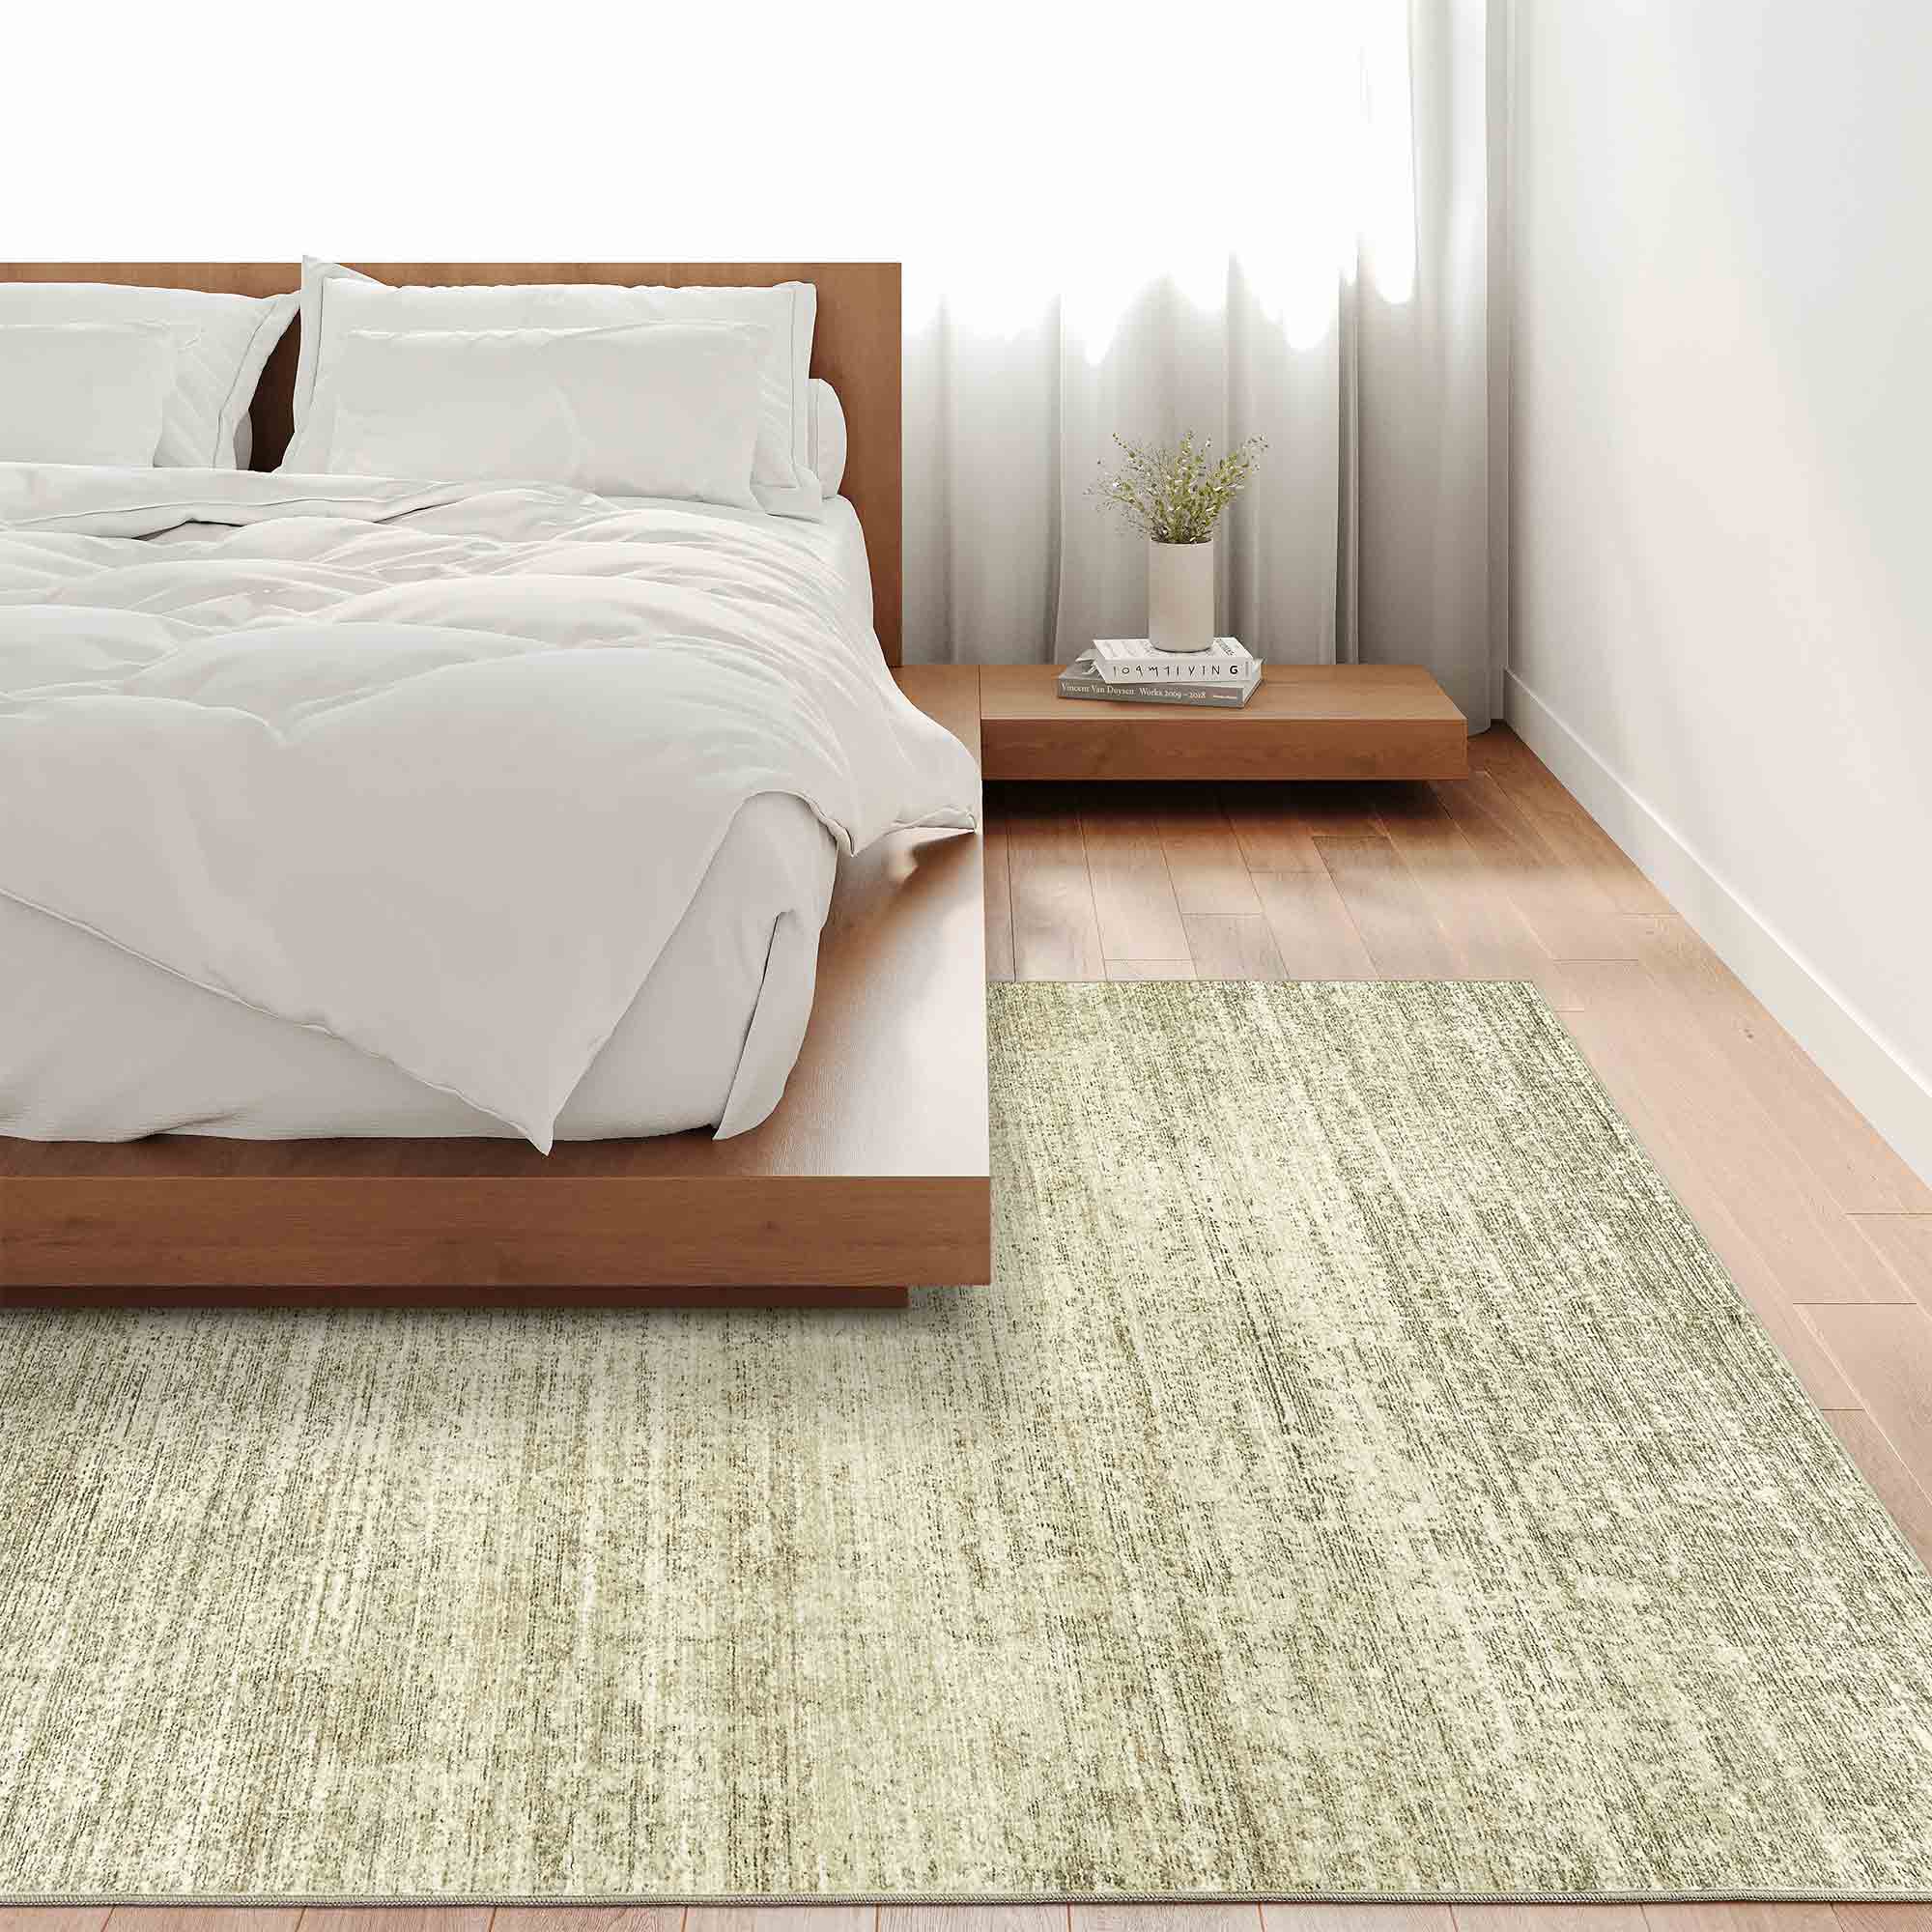 ComiComi Bedroom Rugs PureEase Green